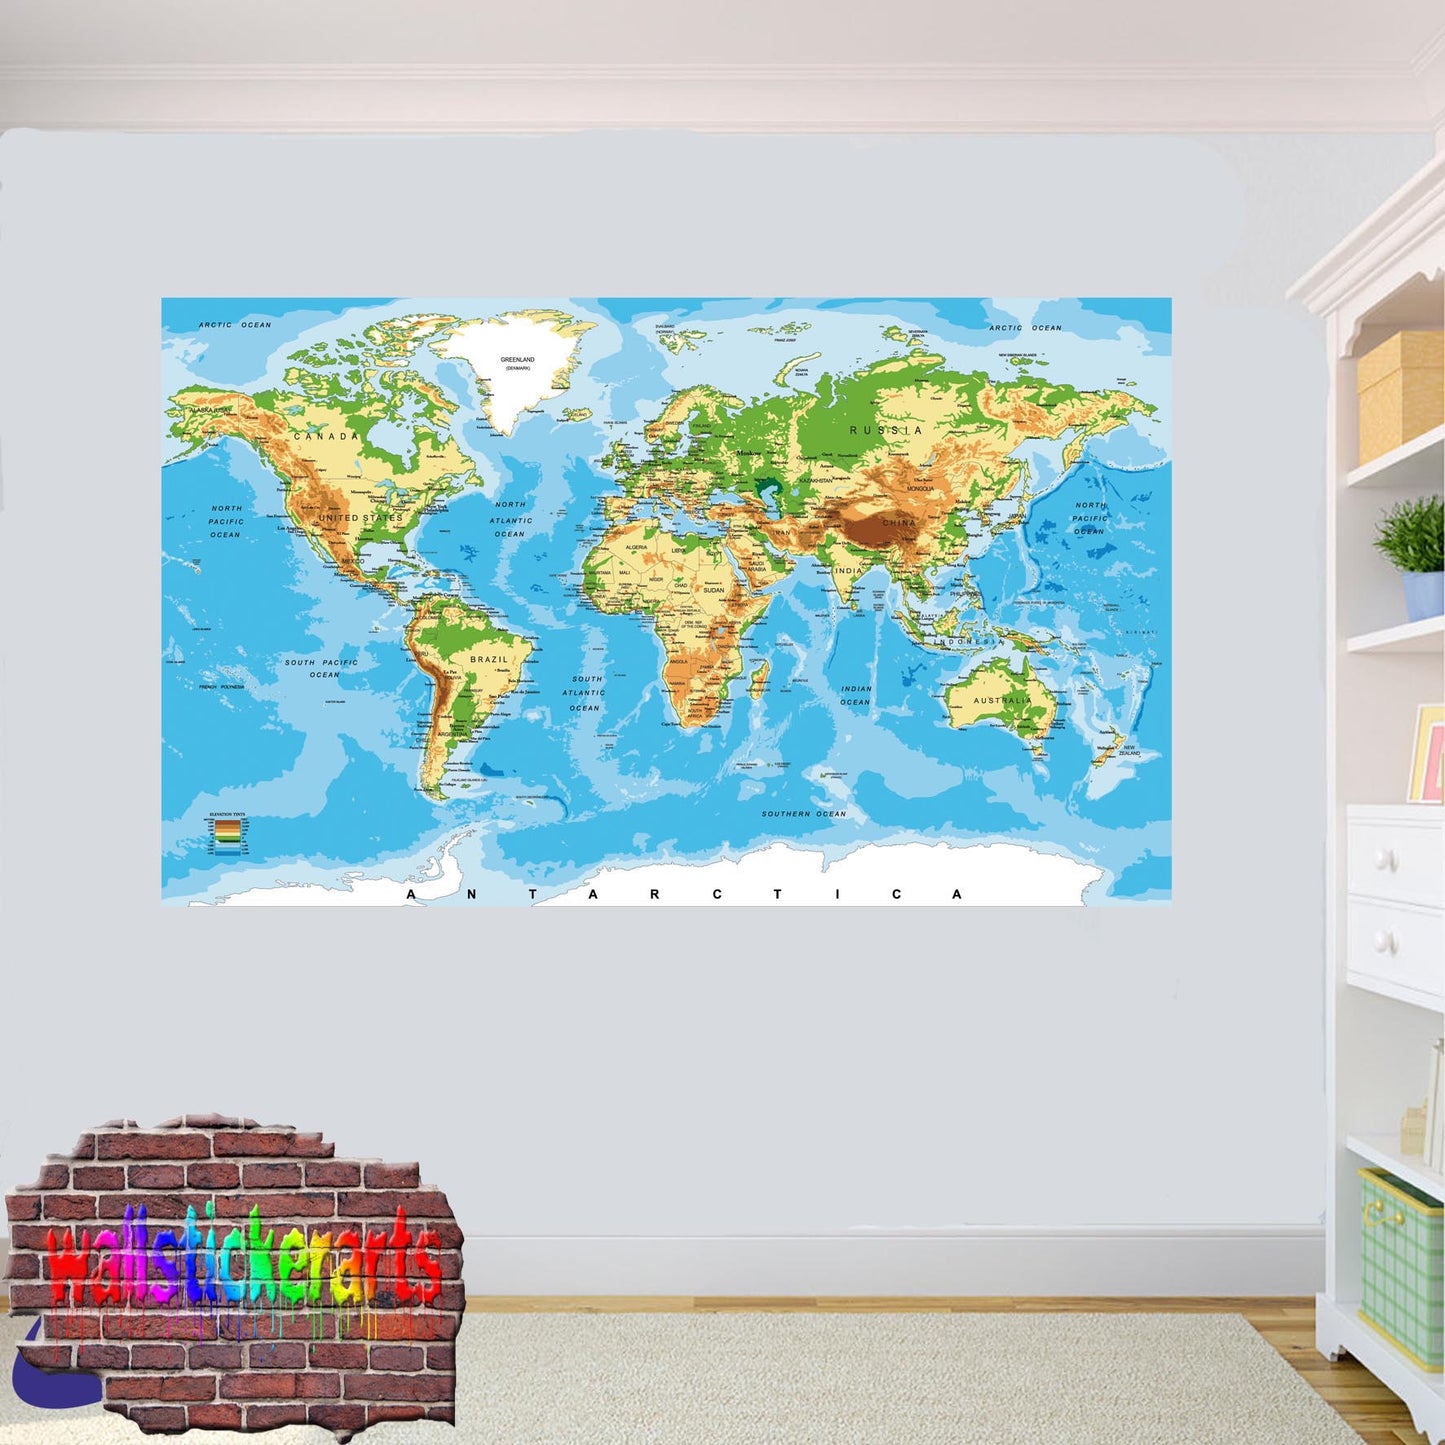 World Physical Map Wall Sticker Room Office Nursery Shop Decor Decal Mural VK1